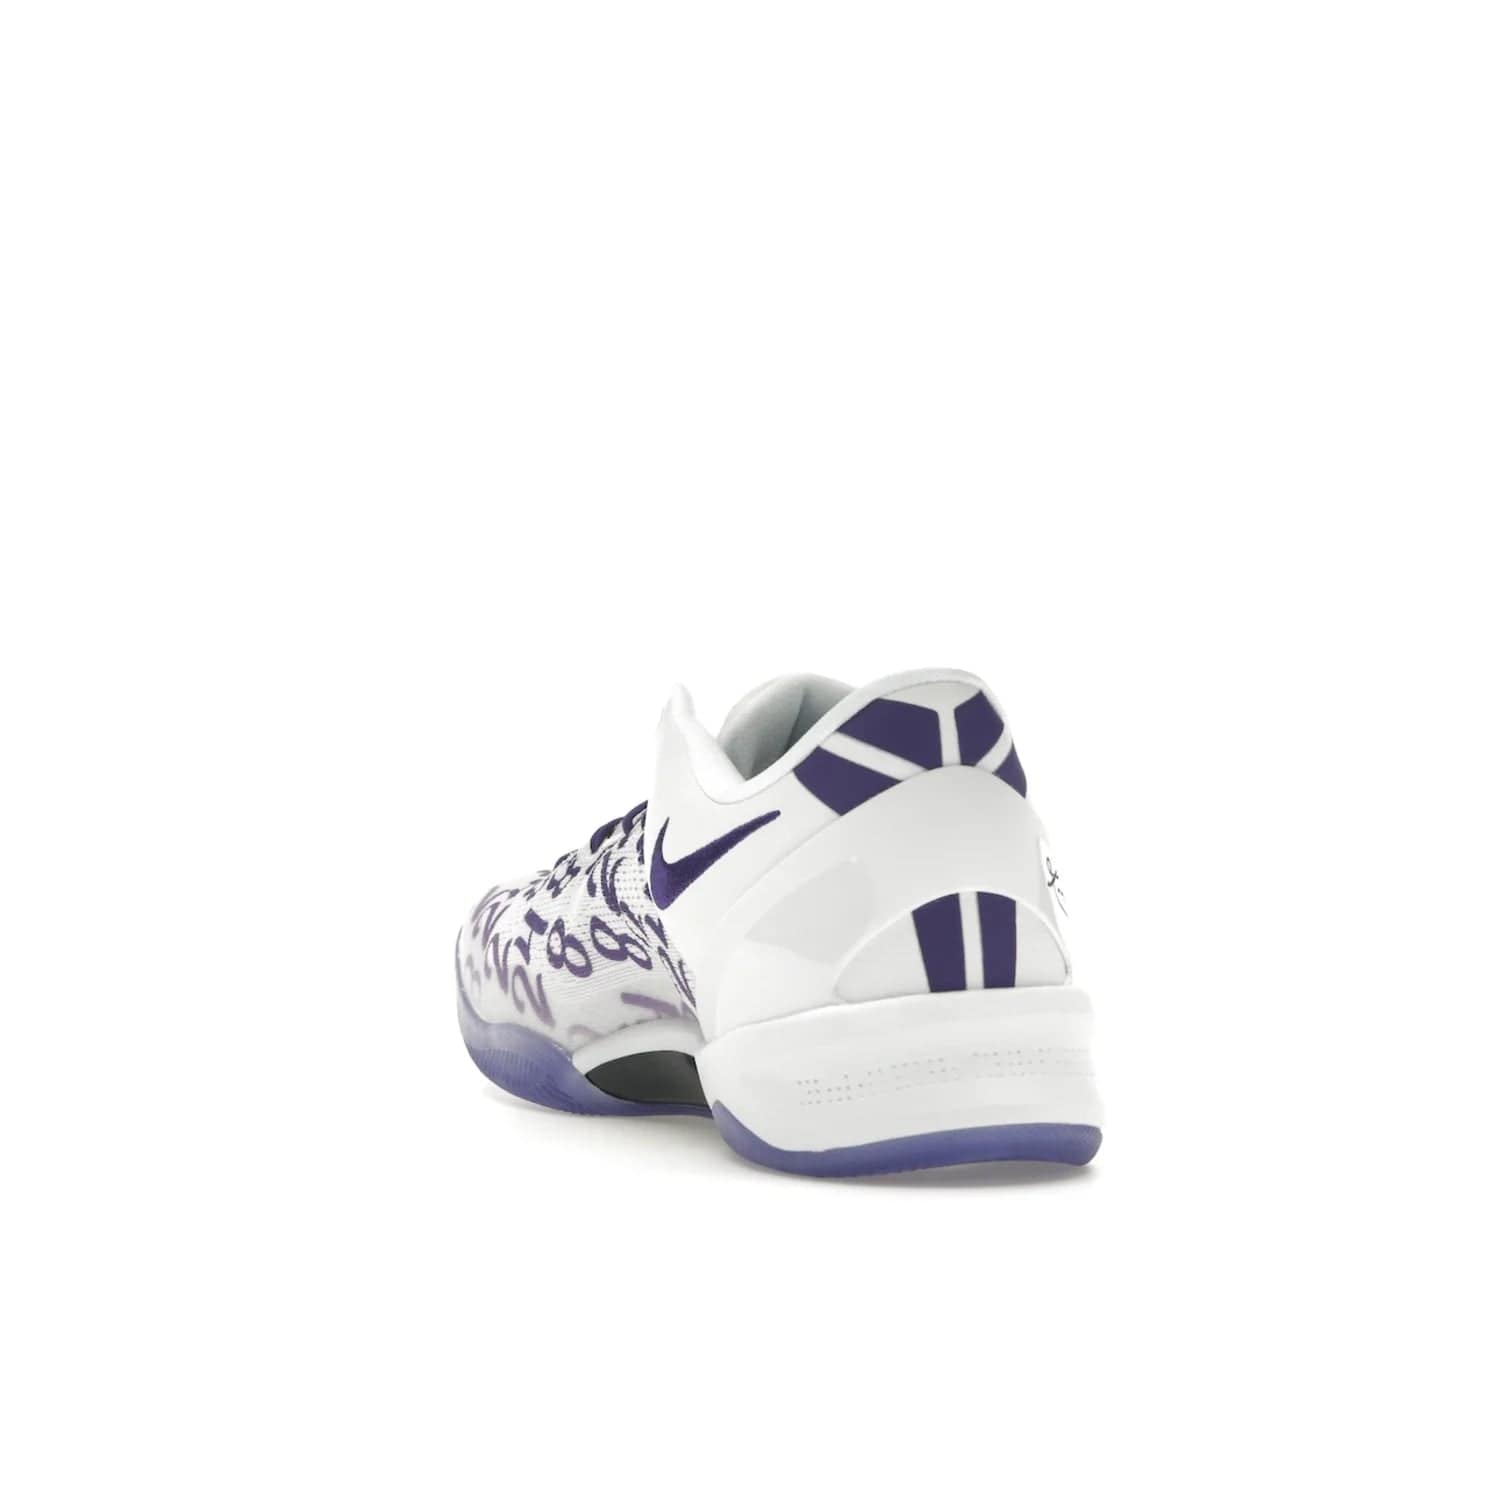 Nike Kobe 8 Protro Court Purple - Image 26 - Only at www.BallersClubKickz.com - 